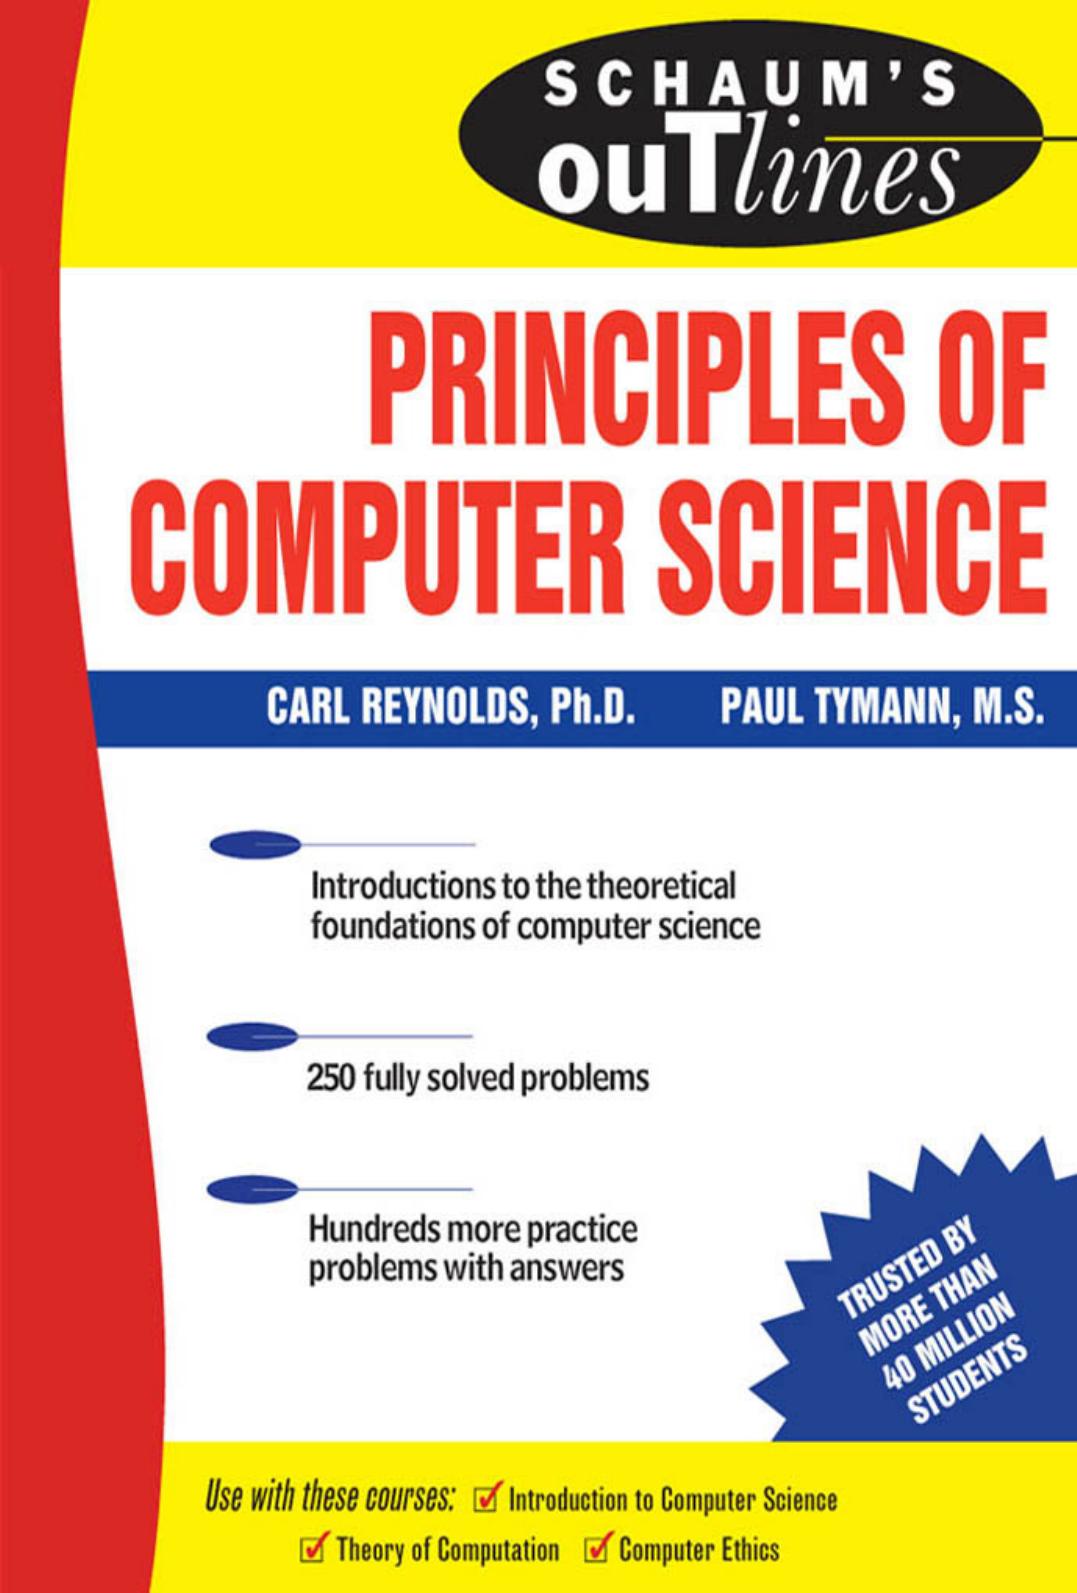 Schaum's Outline of Principles of Computer Science[1]